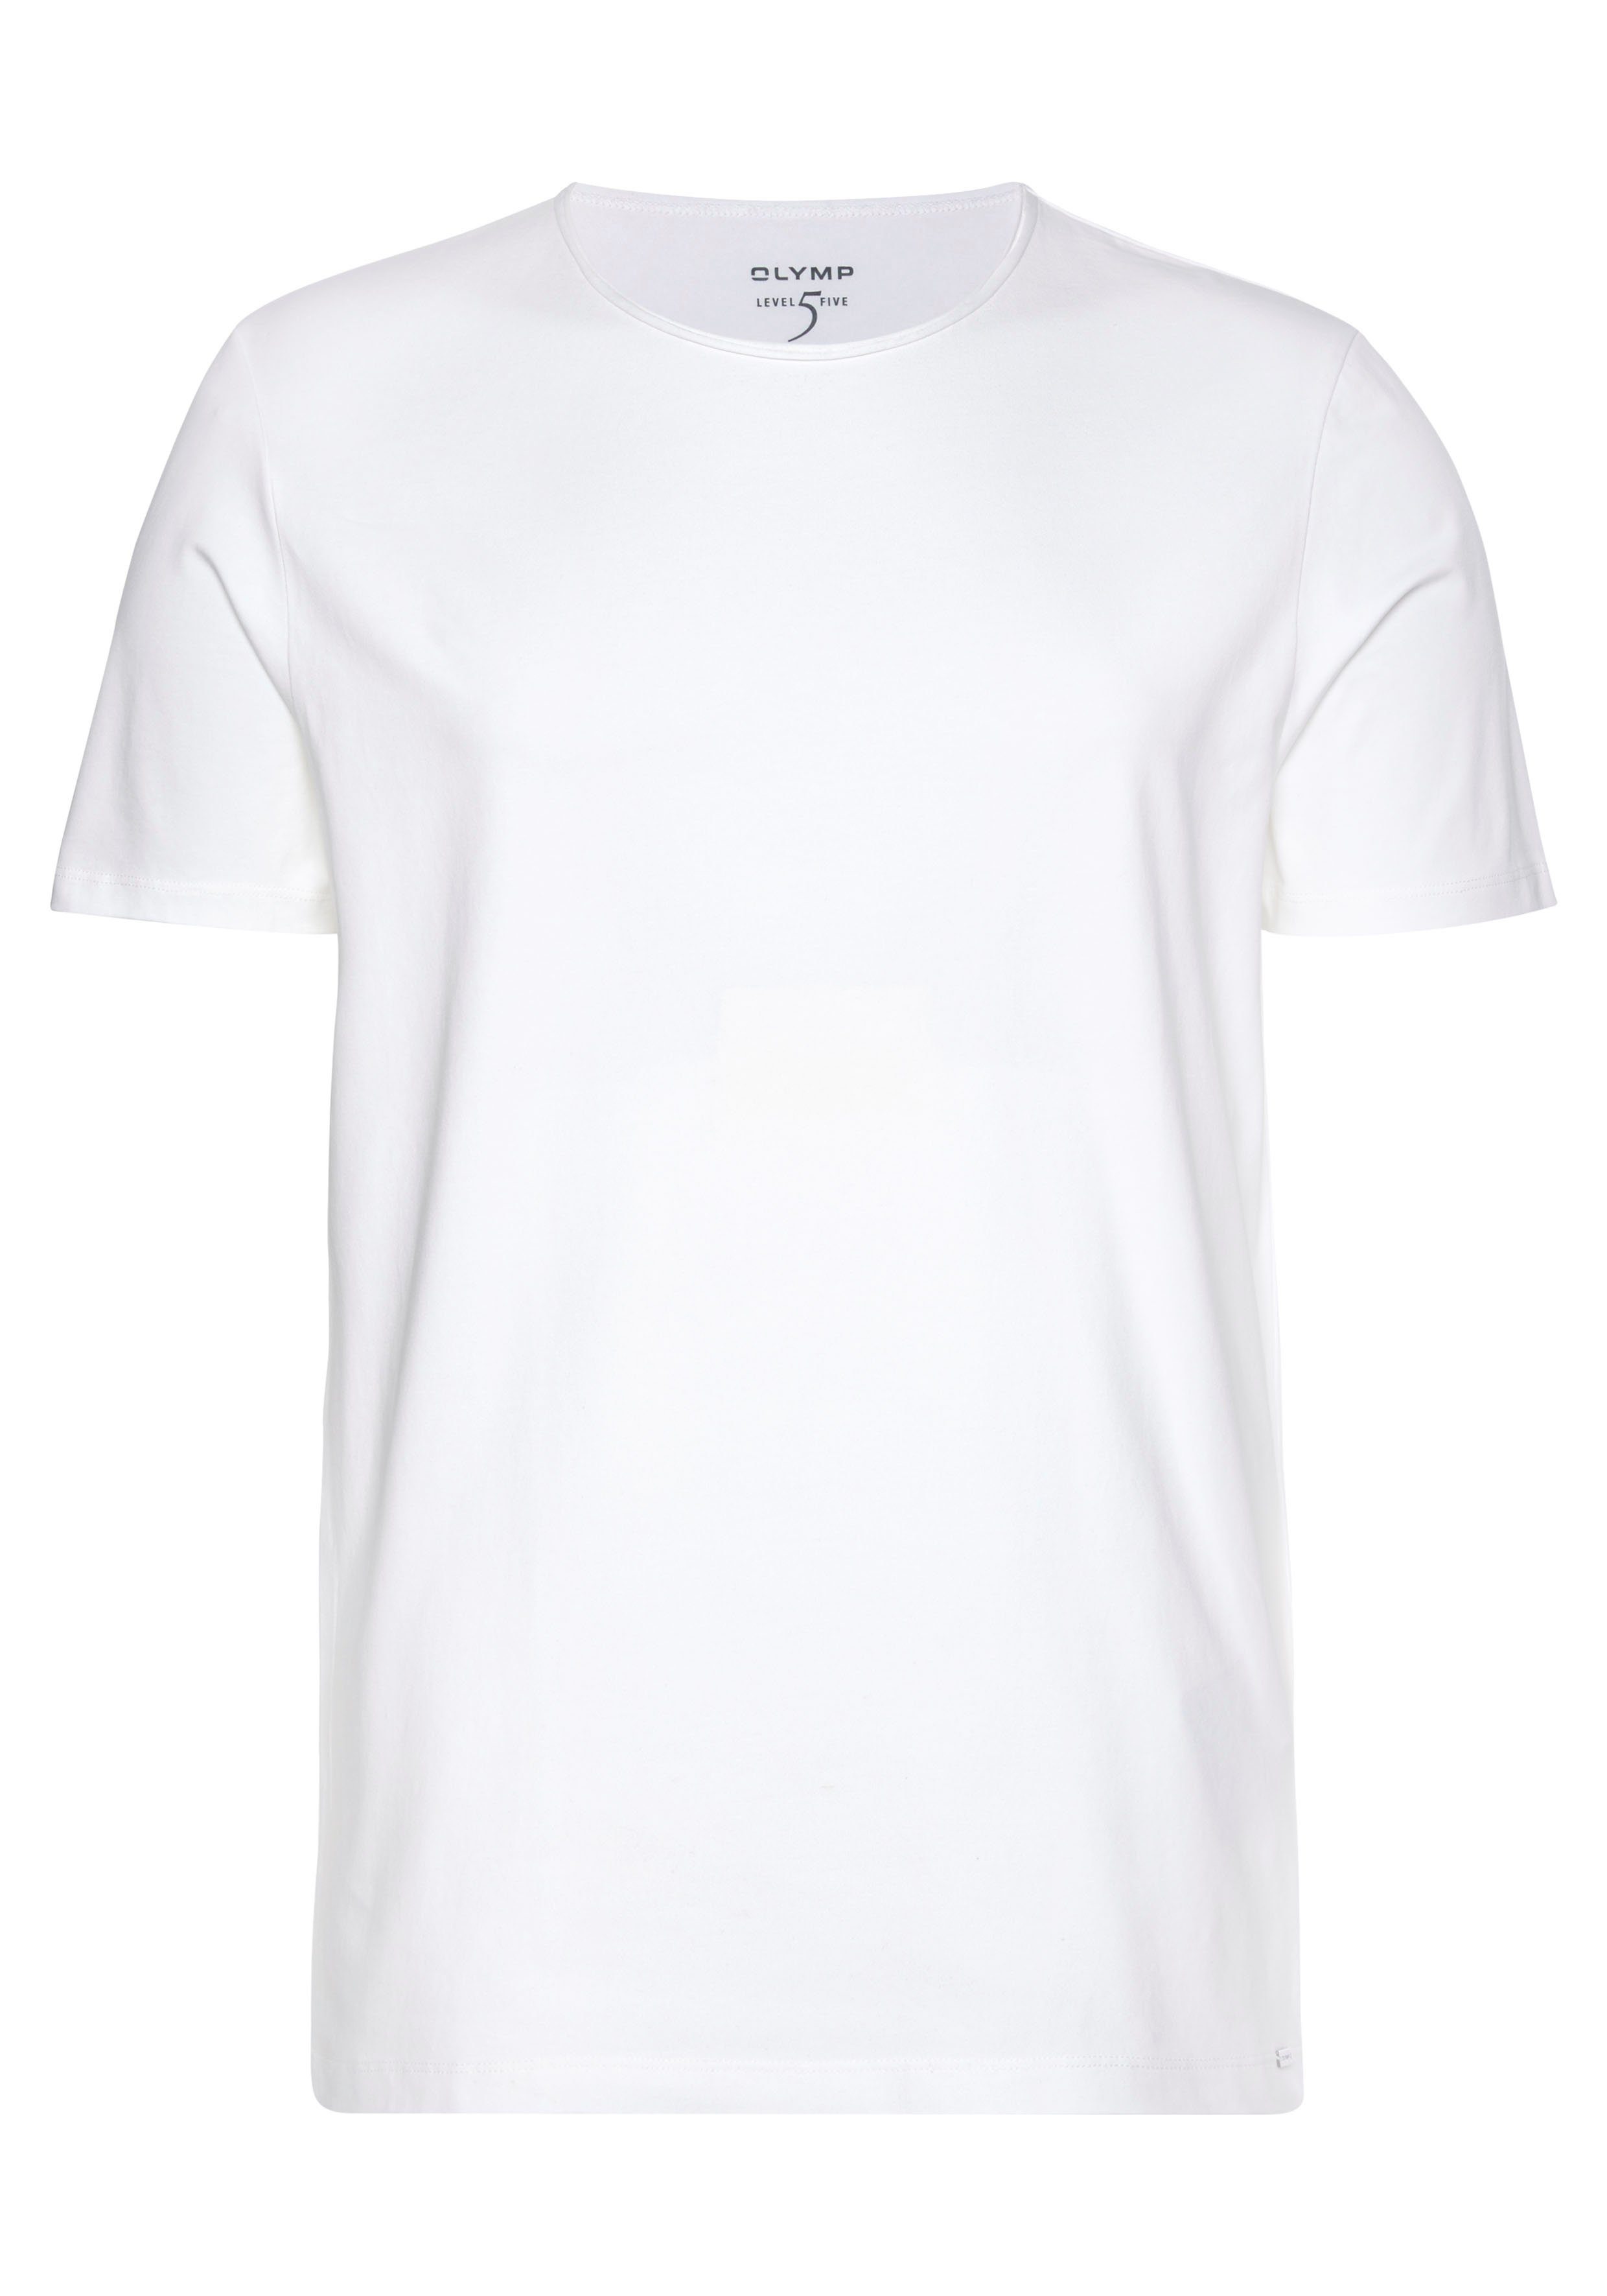 OLYMP T-Shirt Level Five body aus weiß fit feinem Jersey